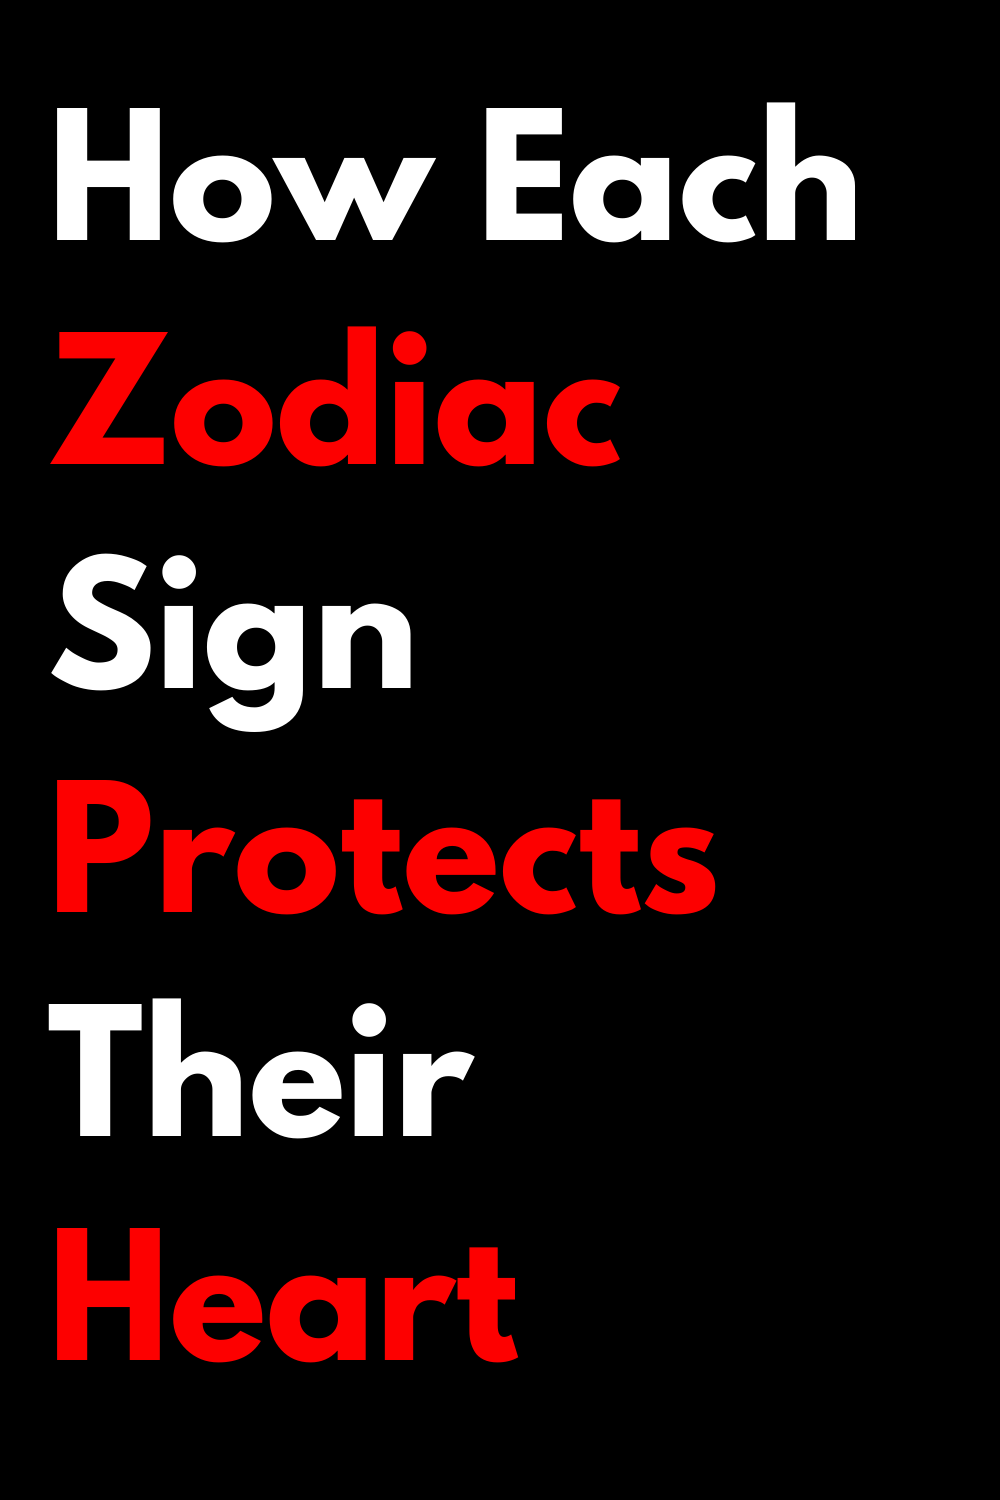 How Each Zodiac Sign Protects Their Heart